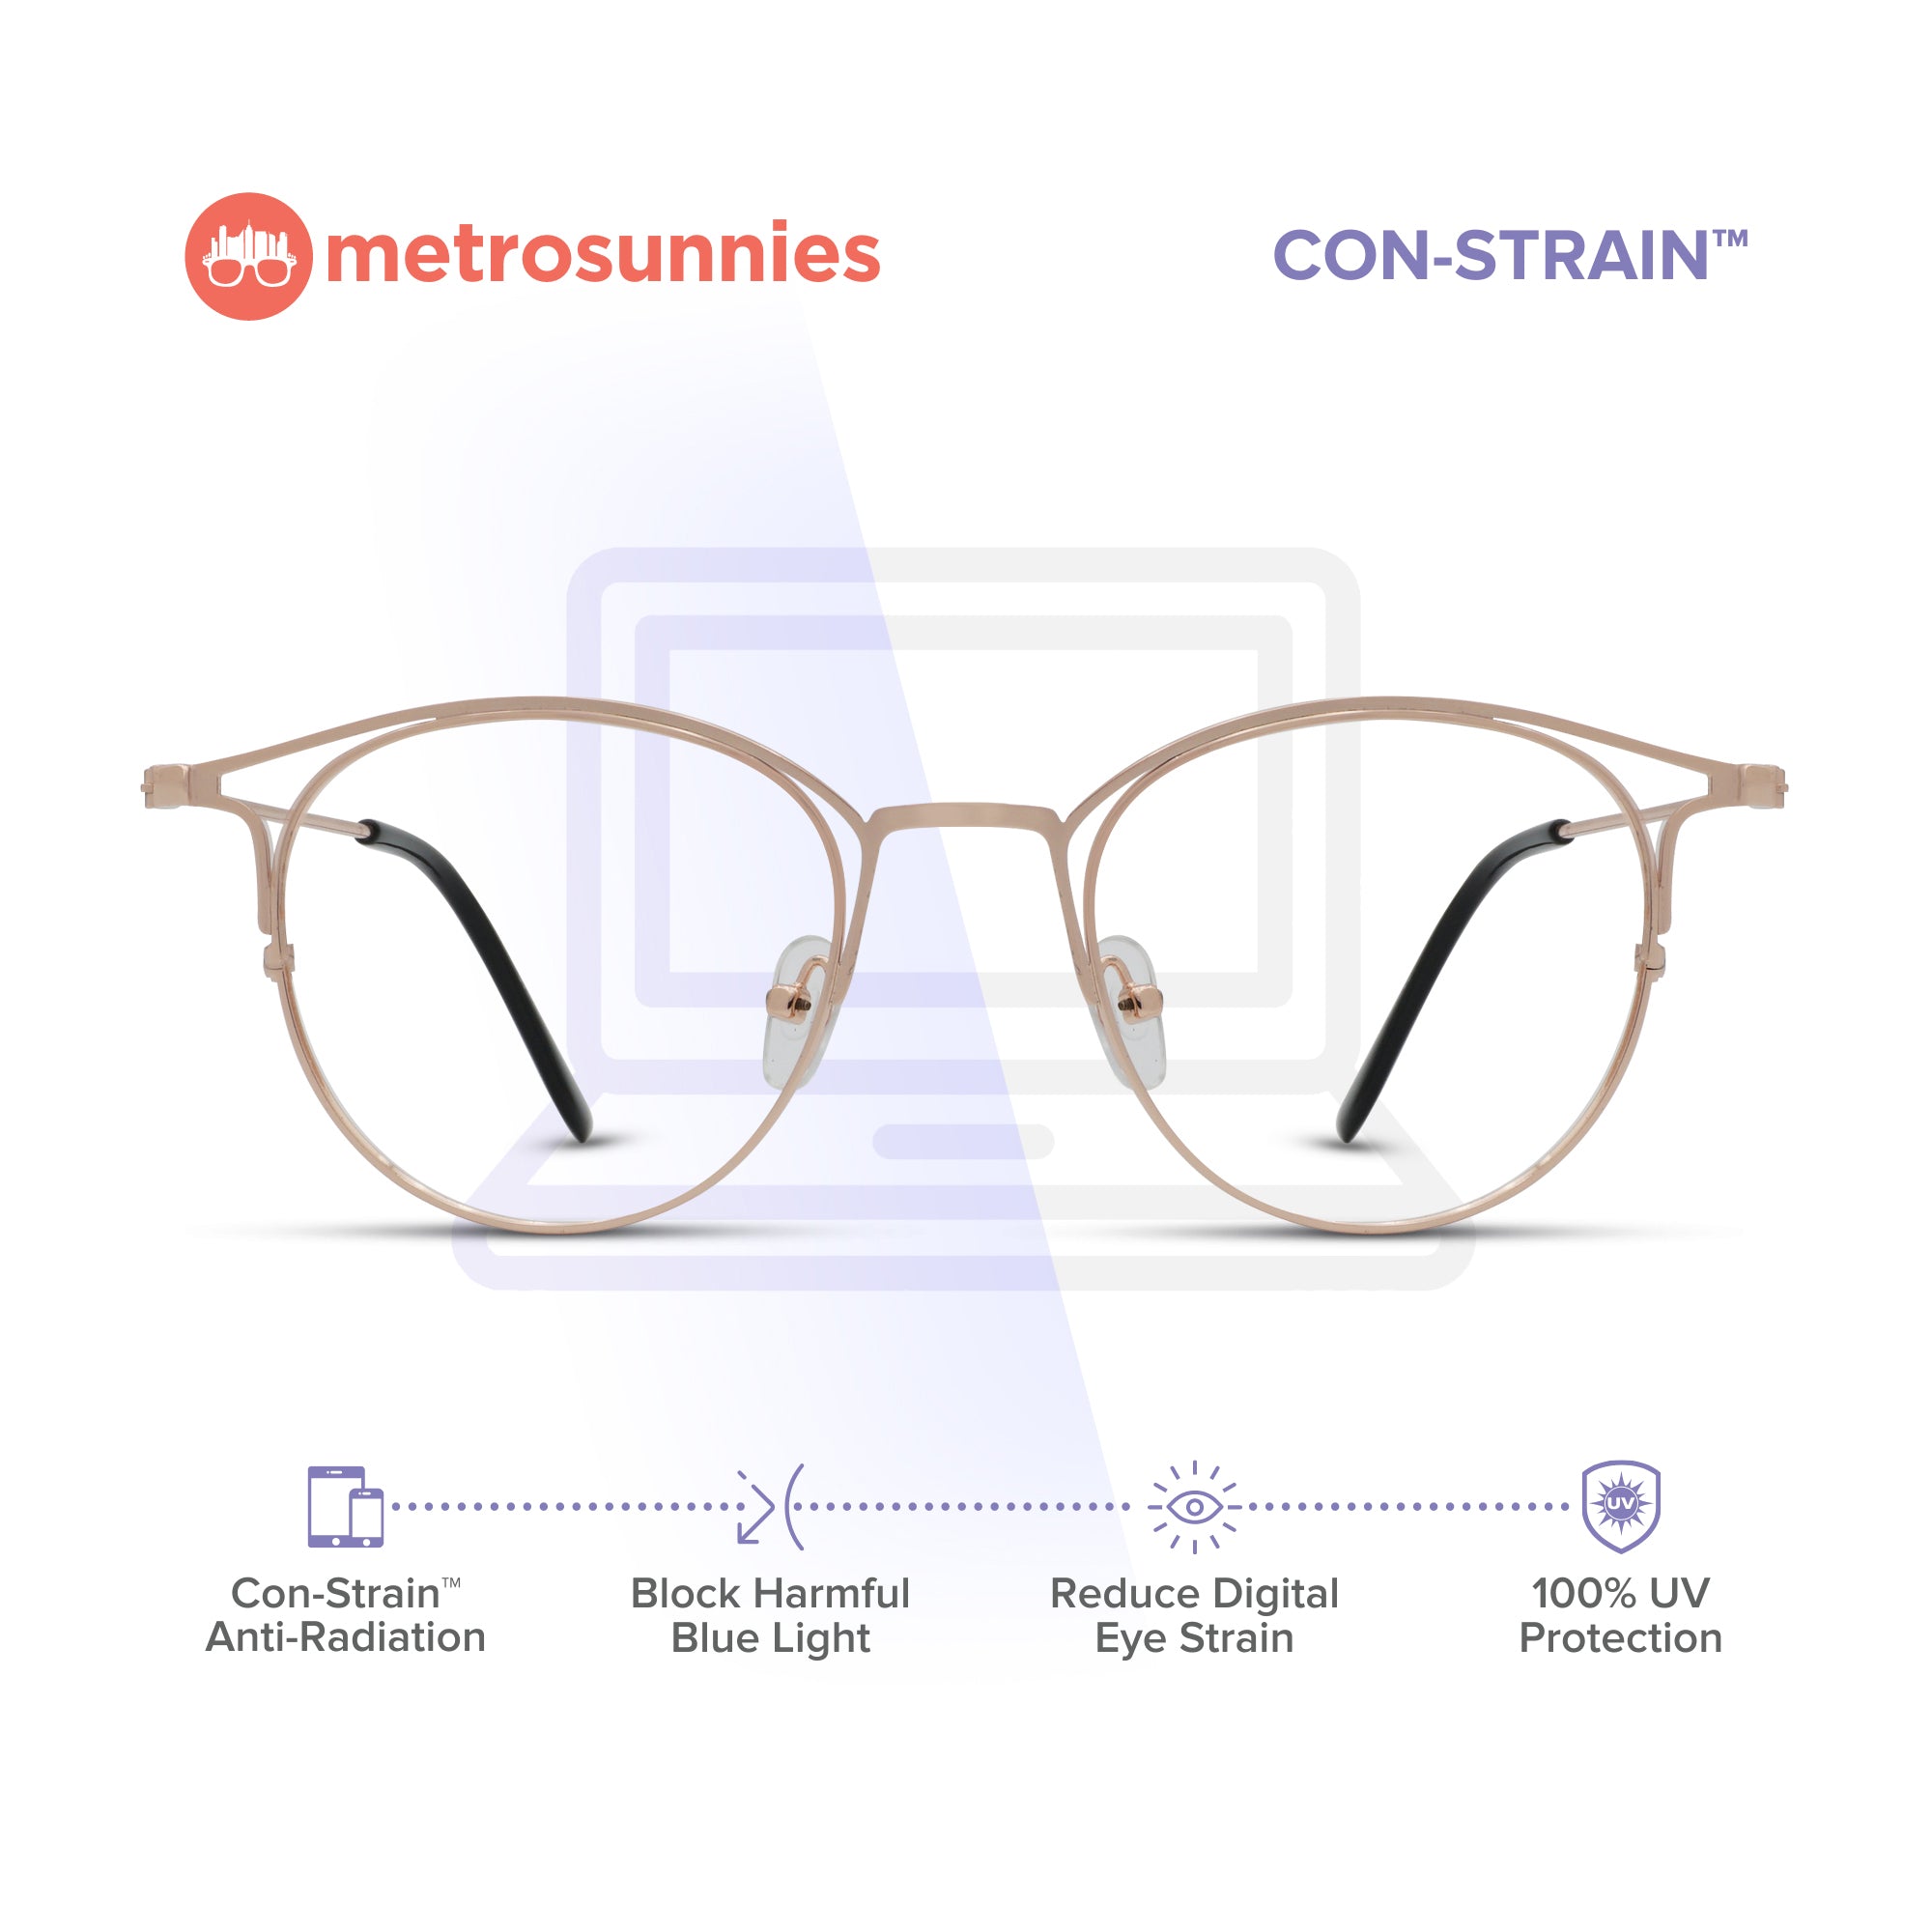 MetroSunnies Phoebe Specs (Rose Gold) / Con-Strain Blue Light / Anti-Radiation Computer Eyeglasses